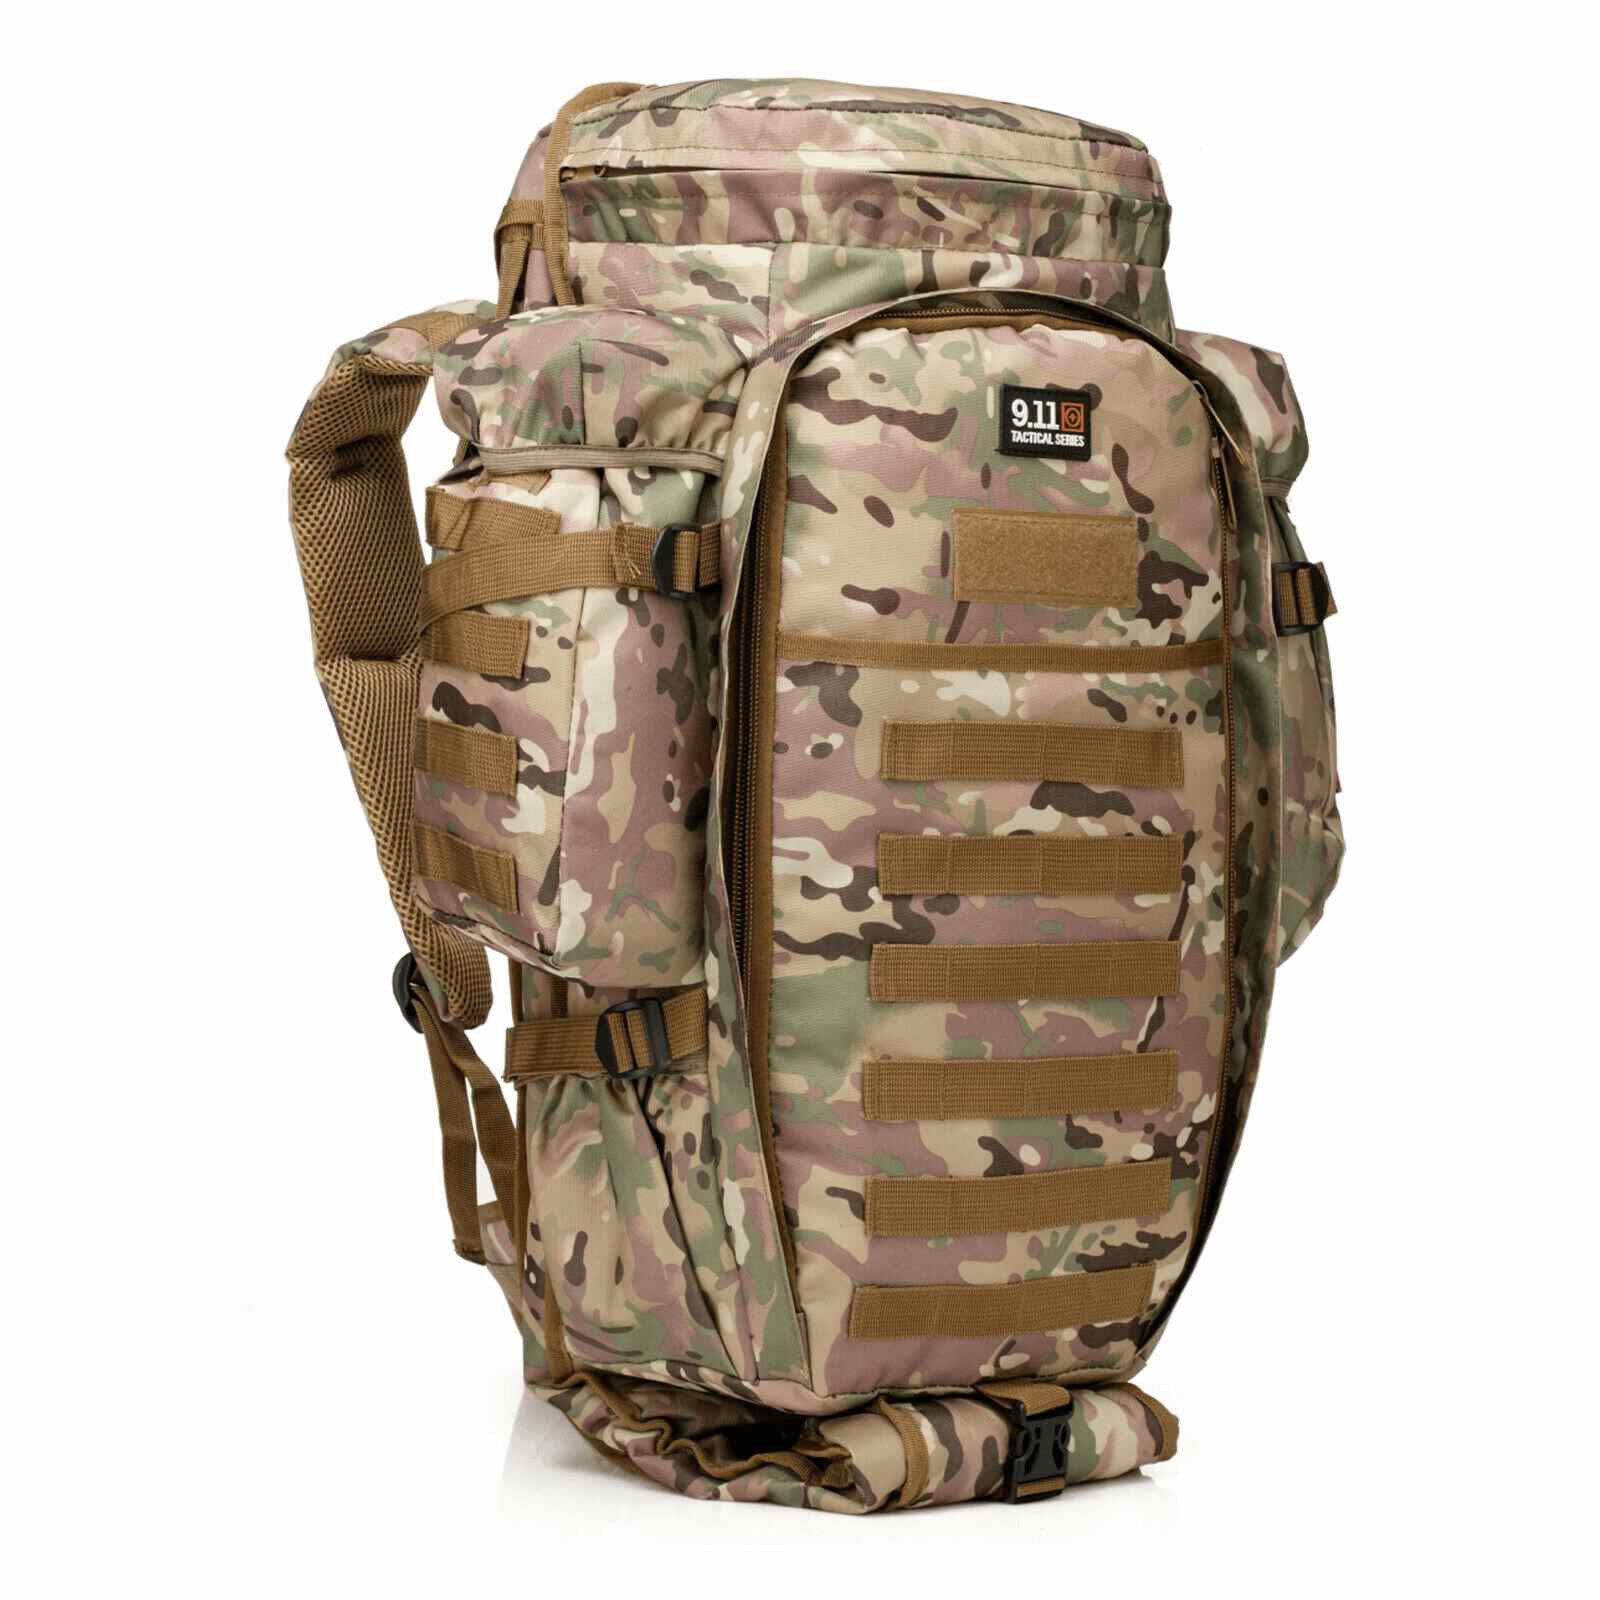 Camo 911 MOLLE Tactical Backpack Waterproof Hunting Bag